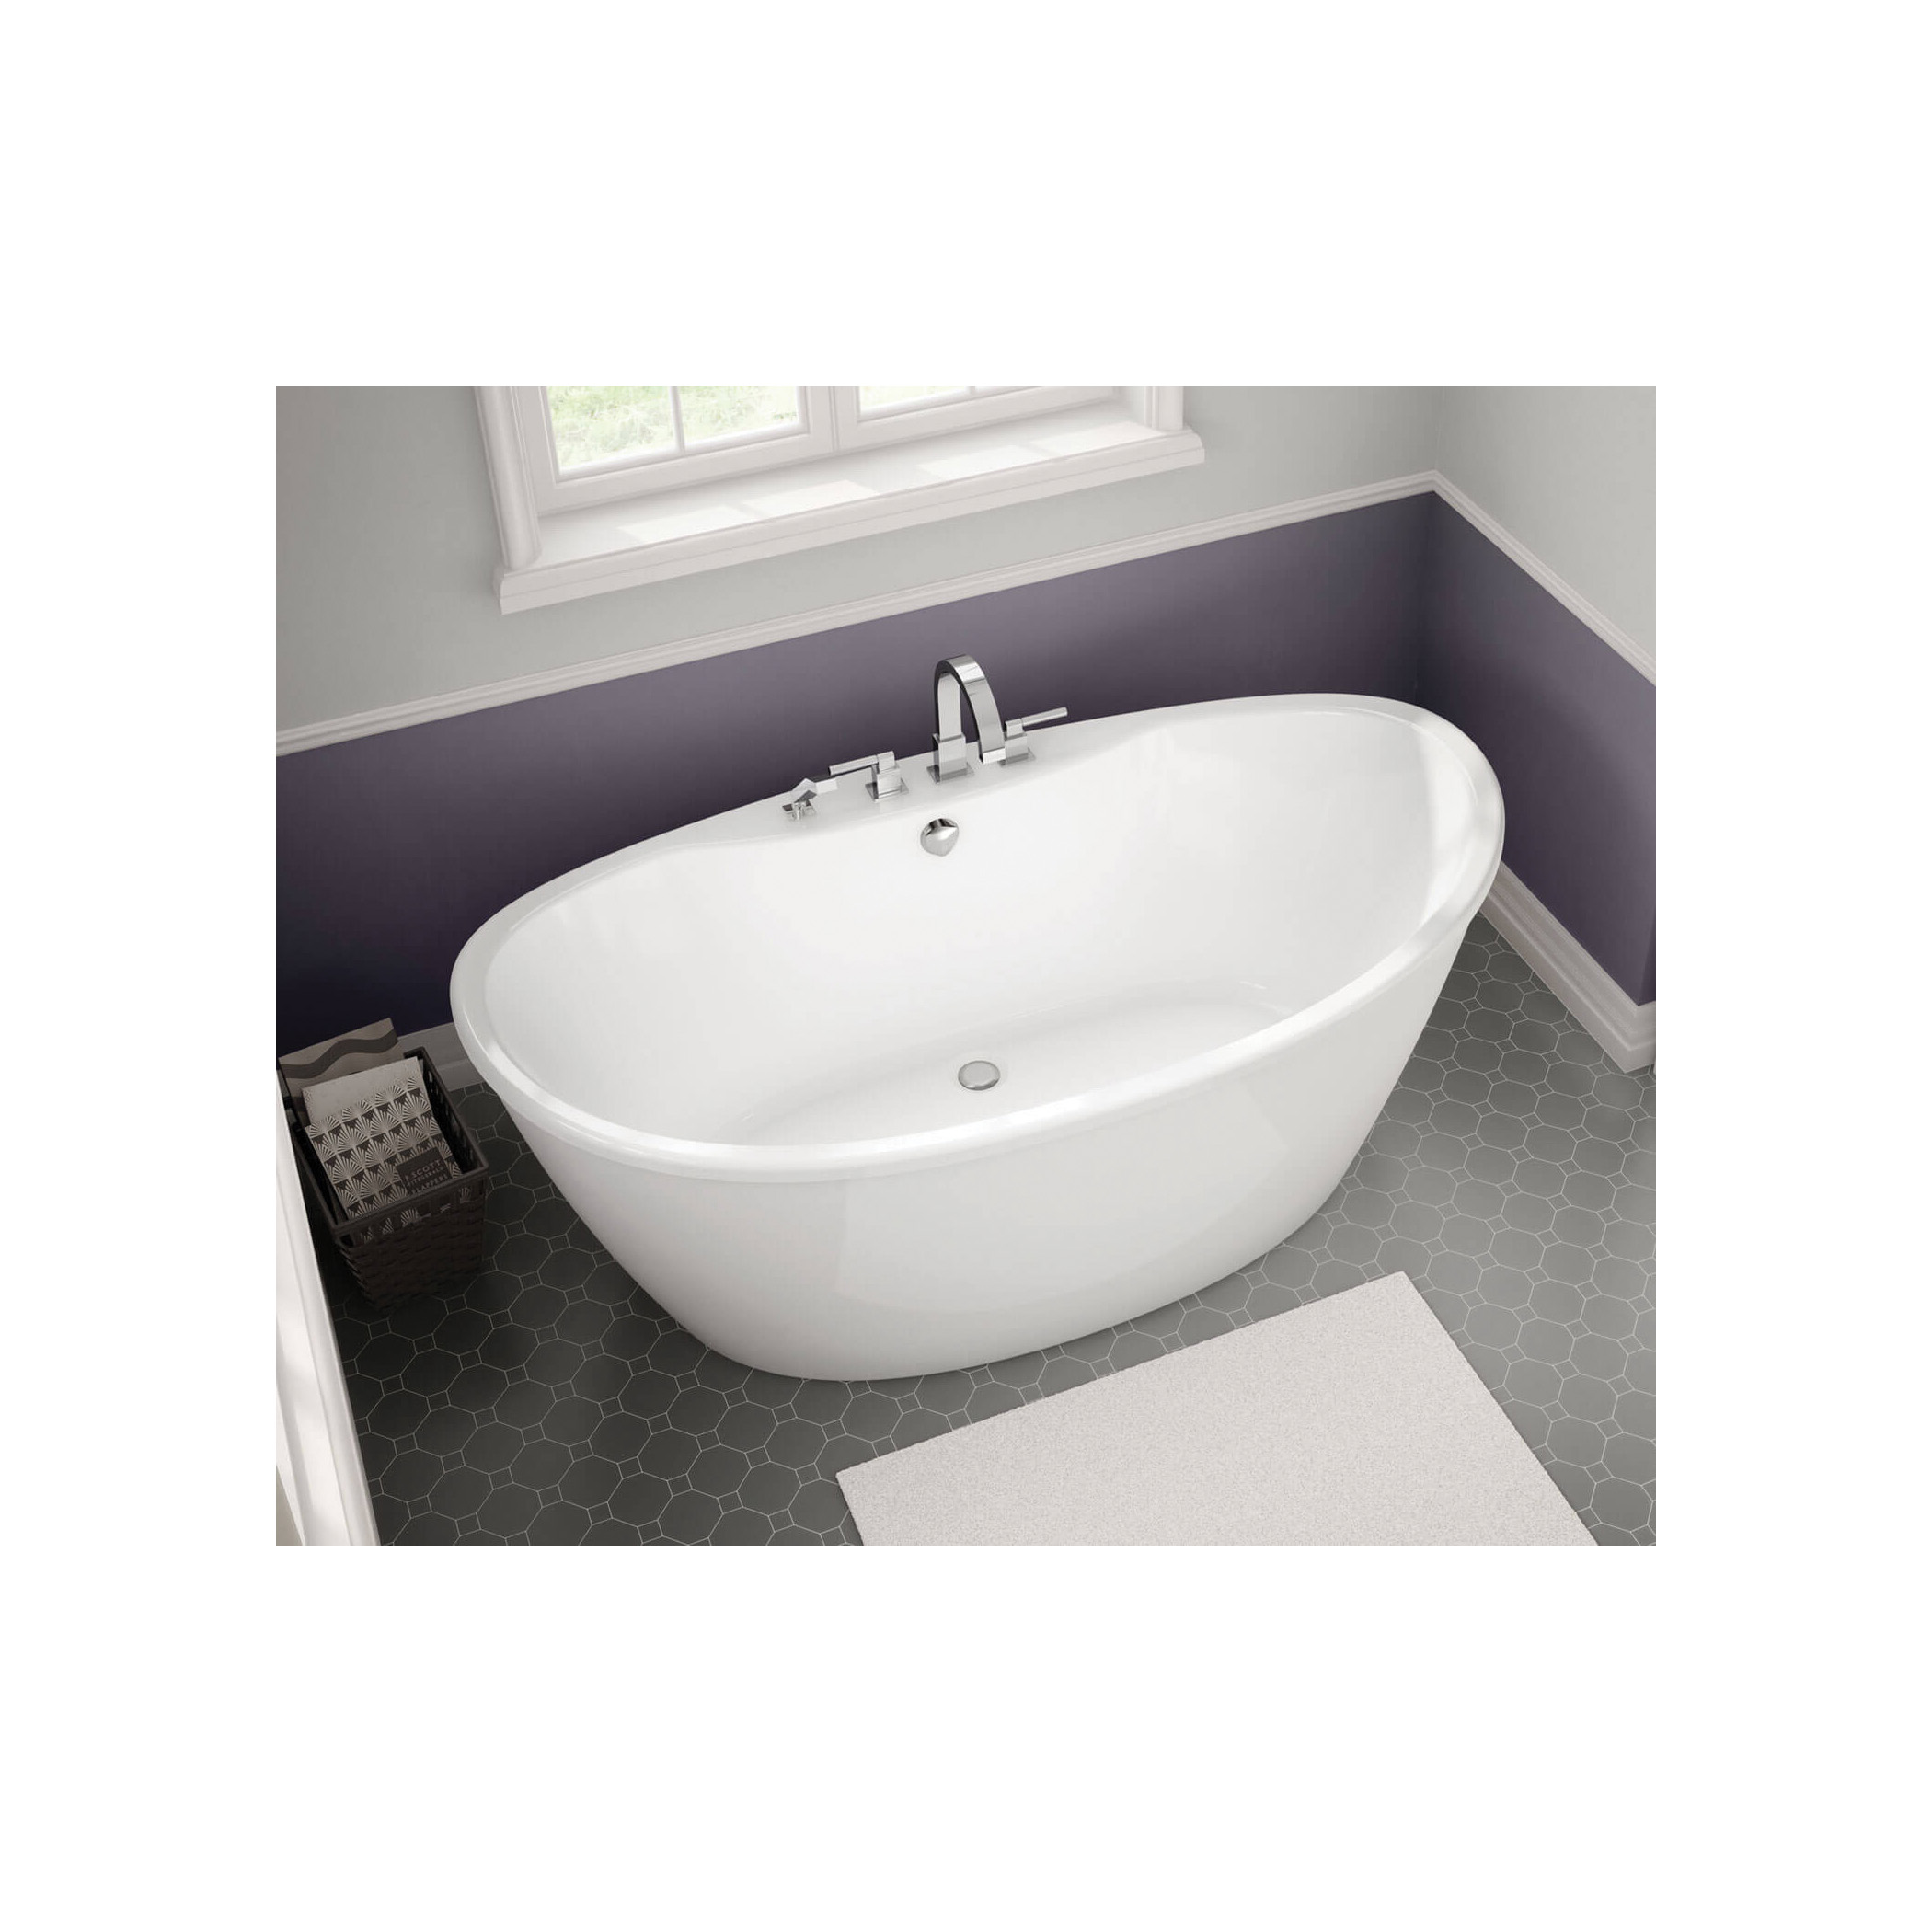 MAAX Delsia 6636 106193-000-002 Bath Tub, 59 gal Capacity, 66 in L, 36 in W, 26-5/8 in H, Acrylic, White, Oval - 3